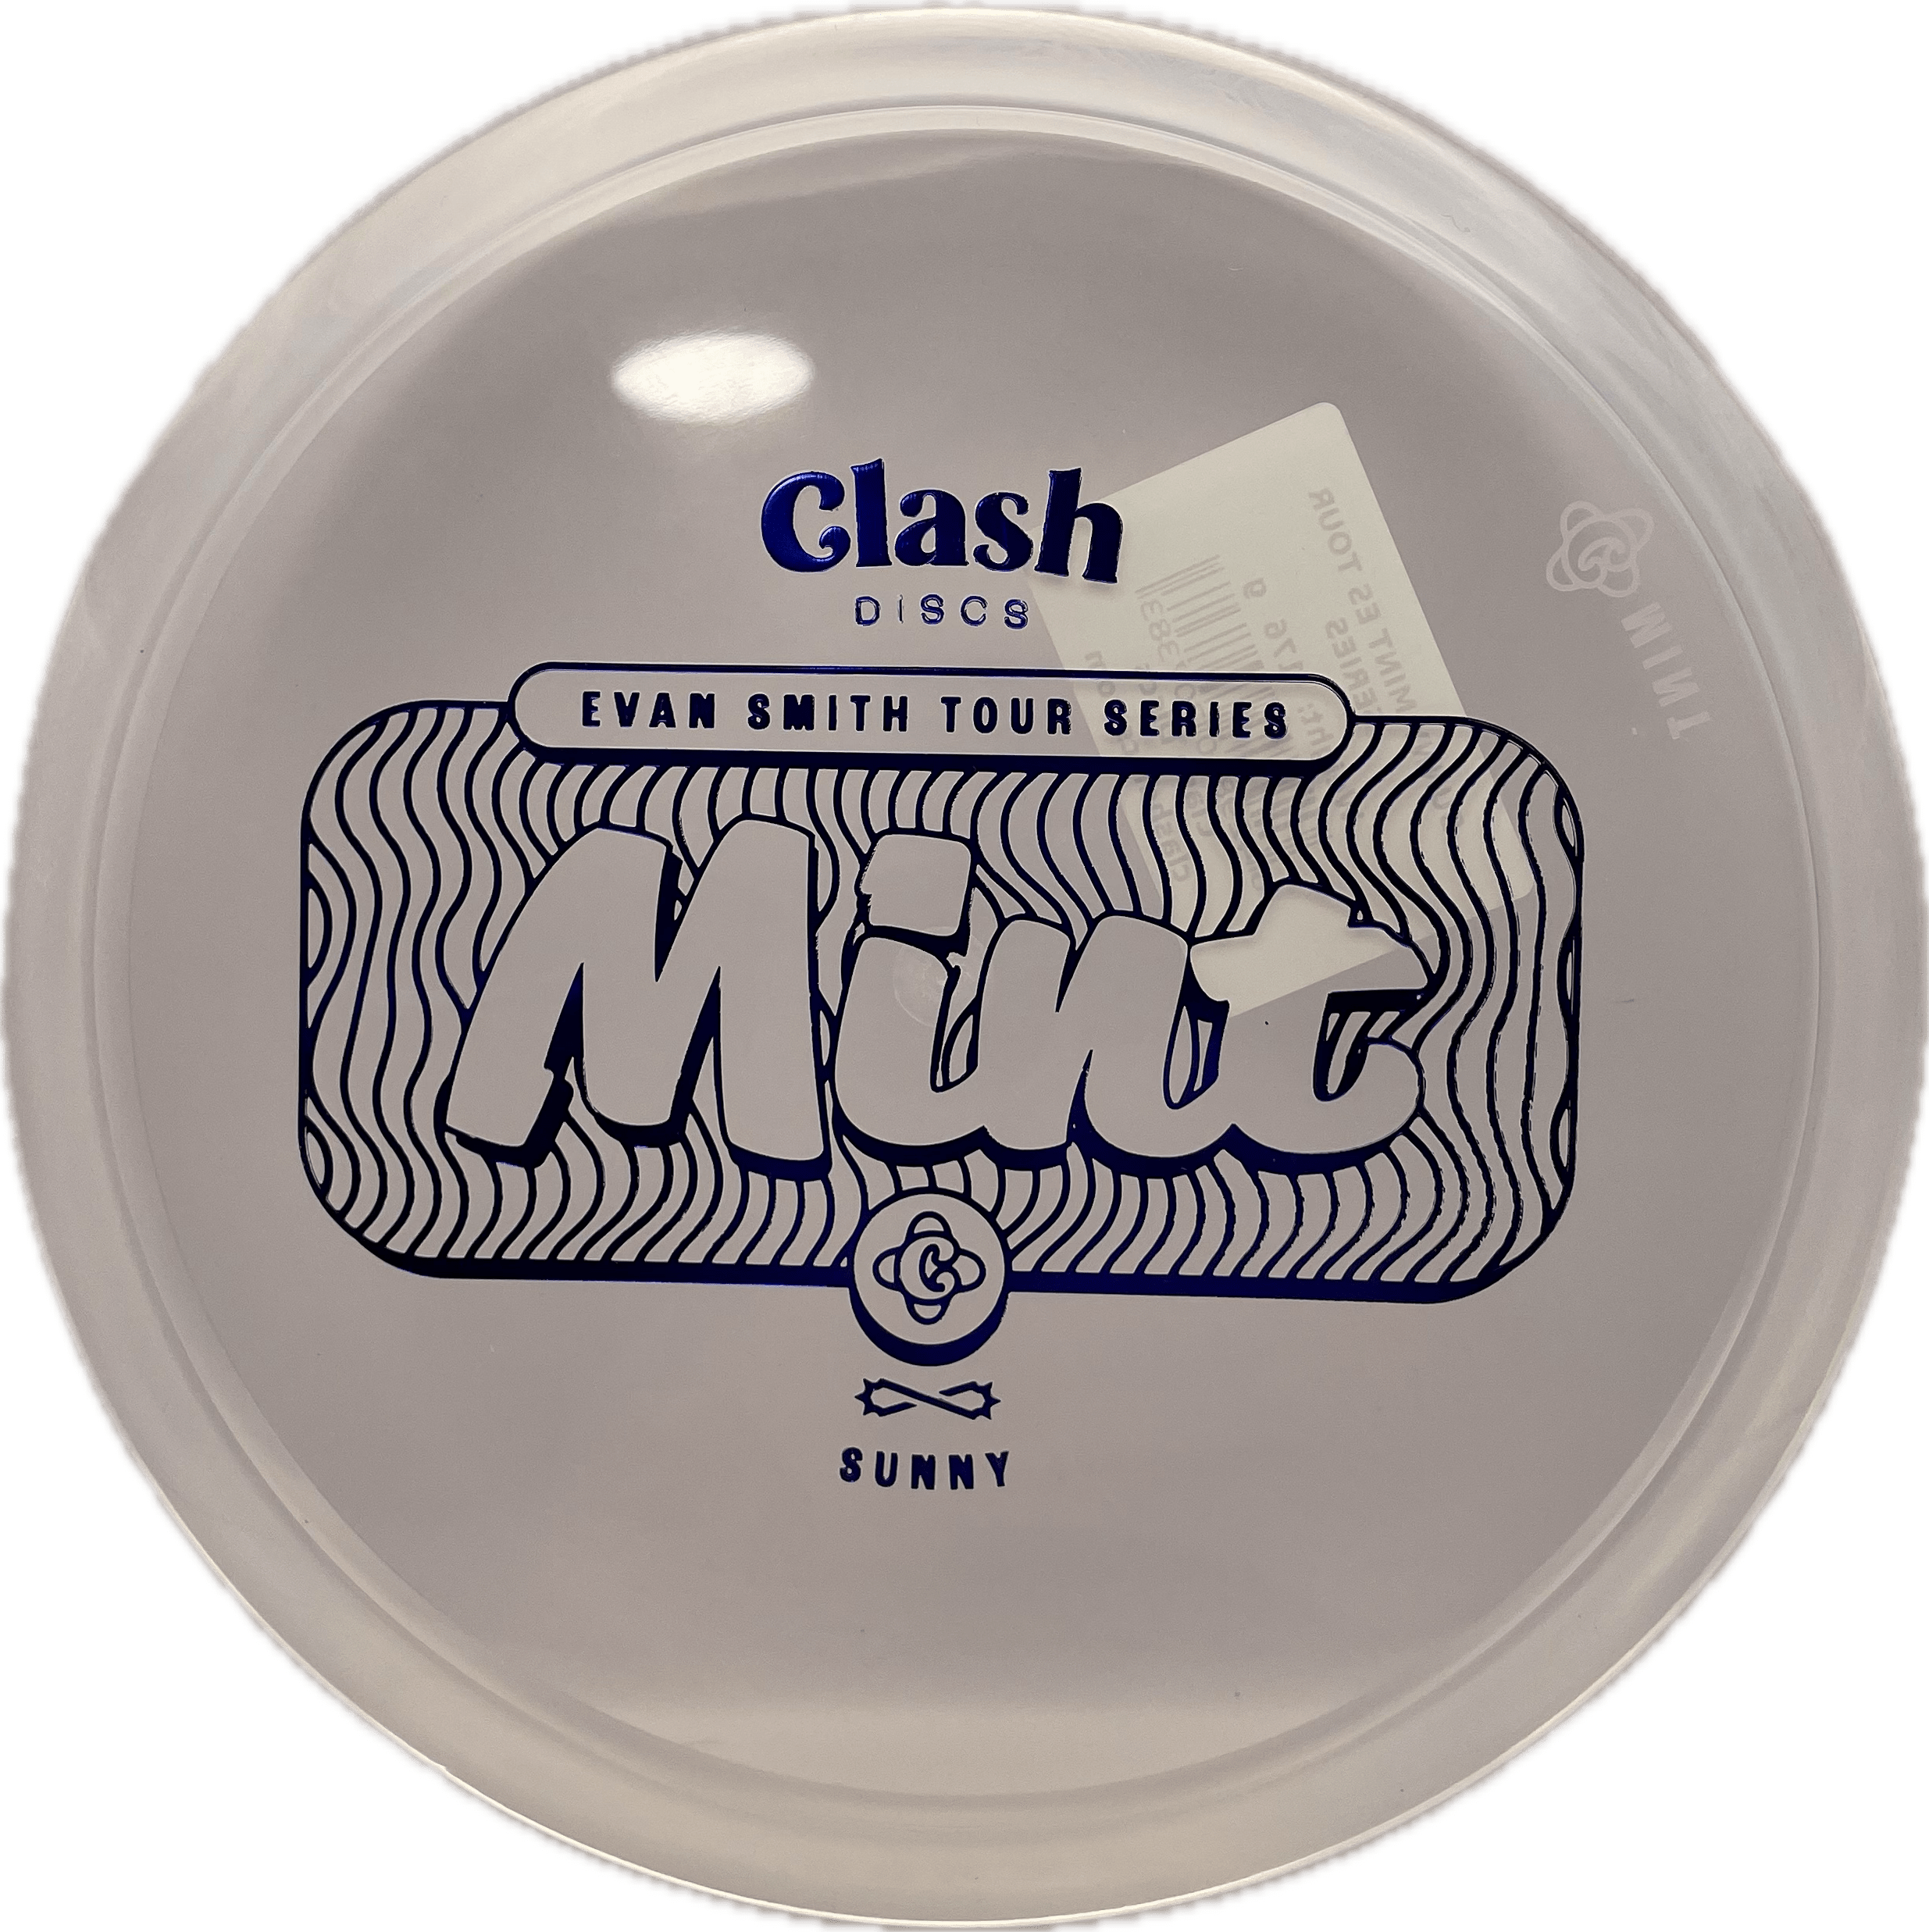 Clash Mint